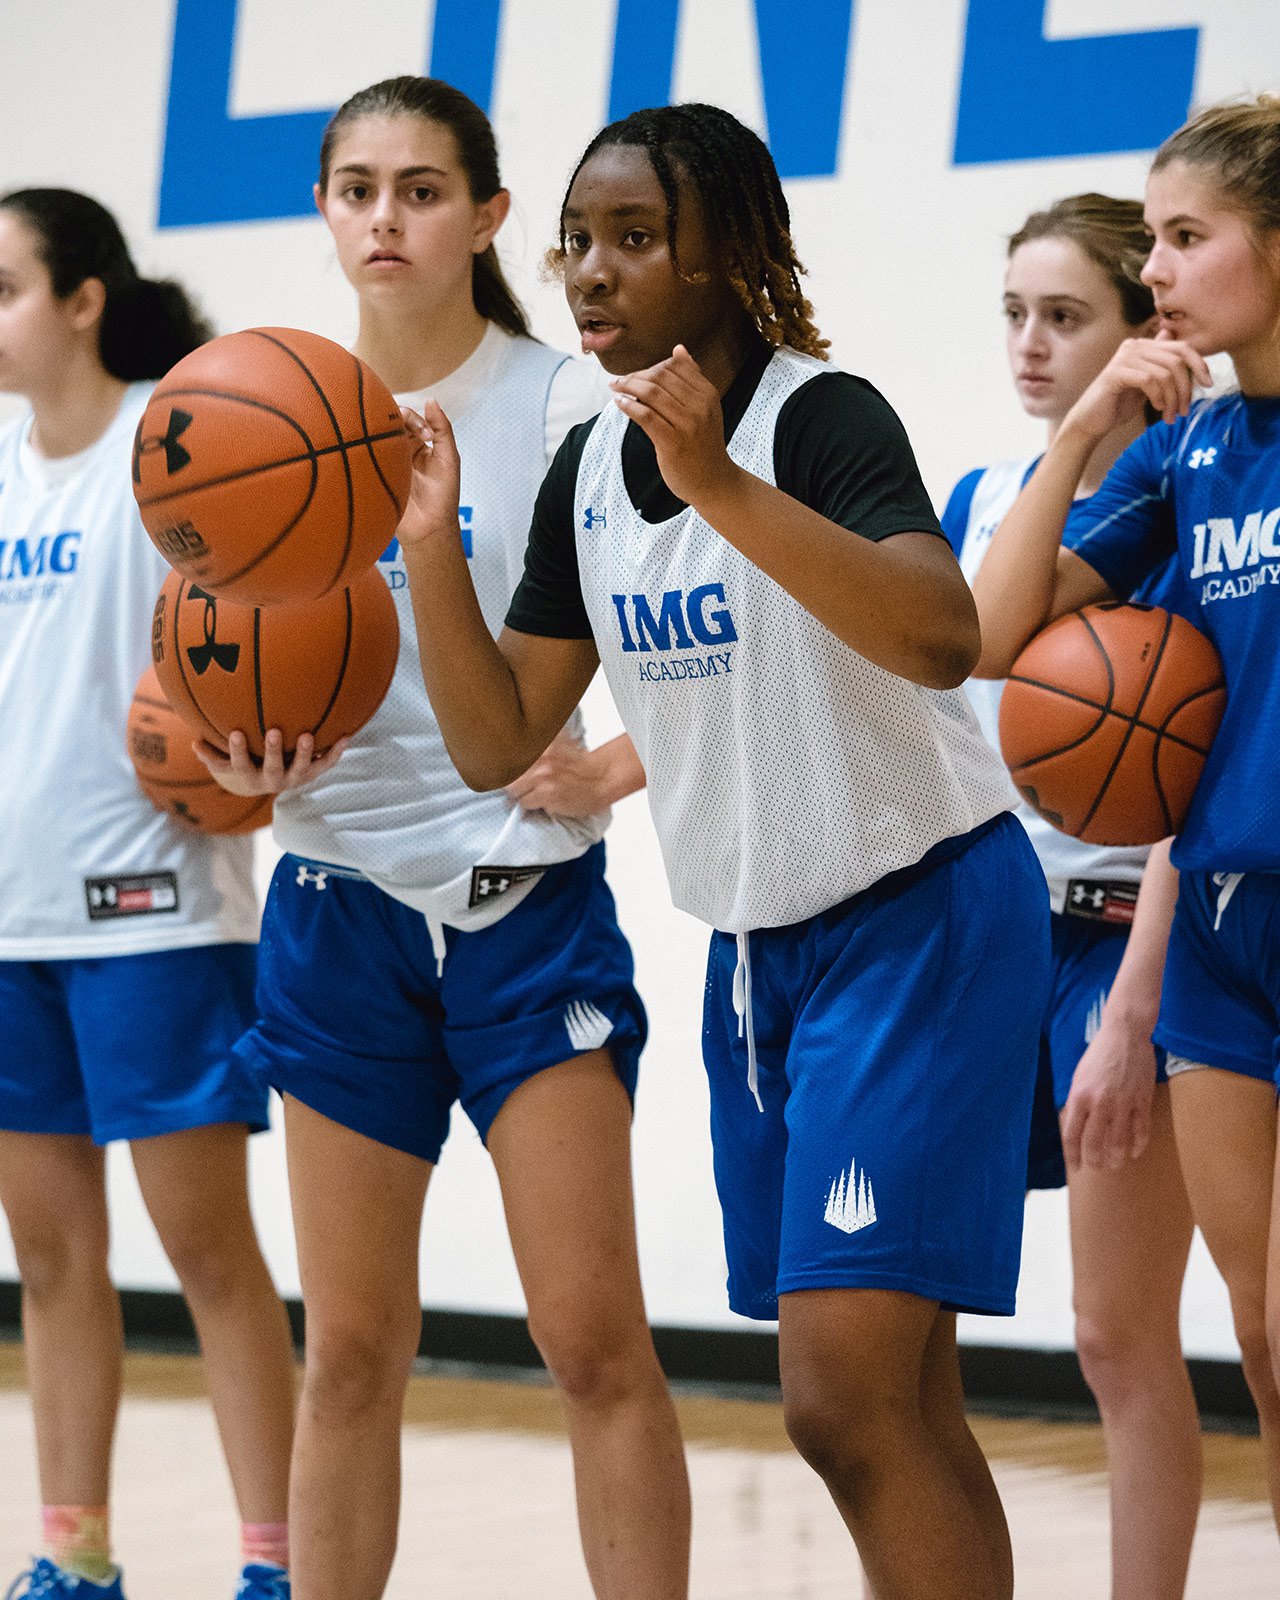 IMG Academy girls basketball campers practice basketball drills